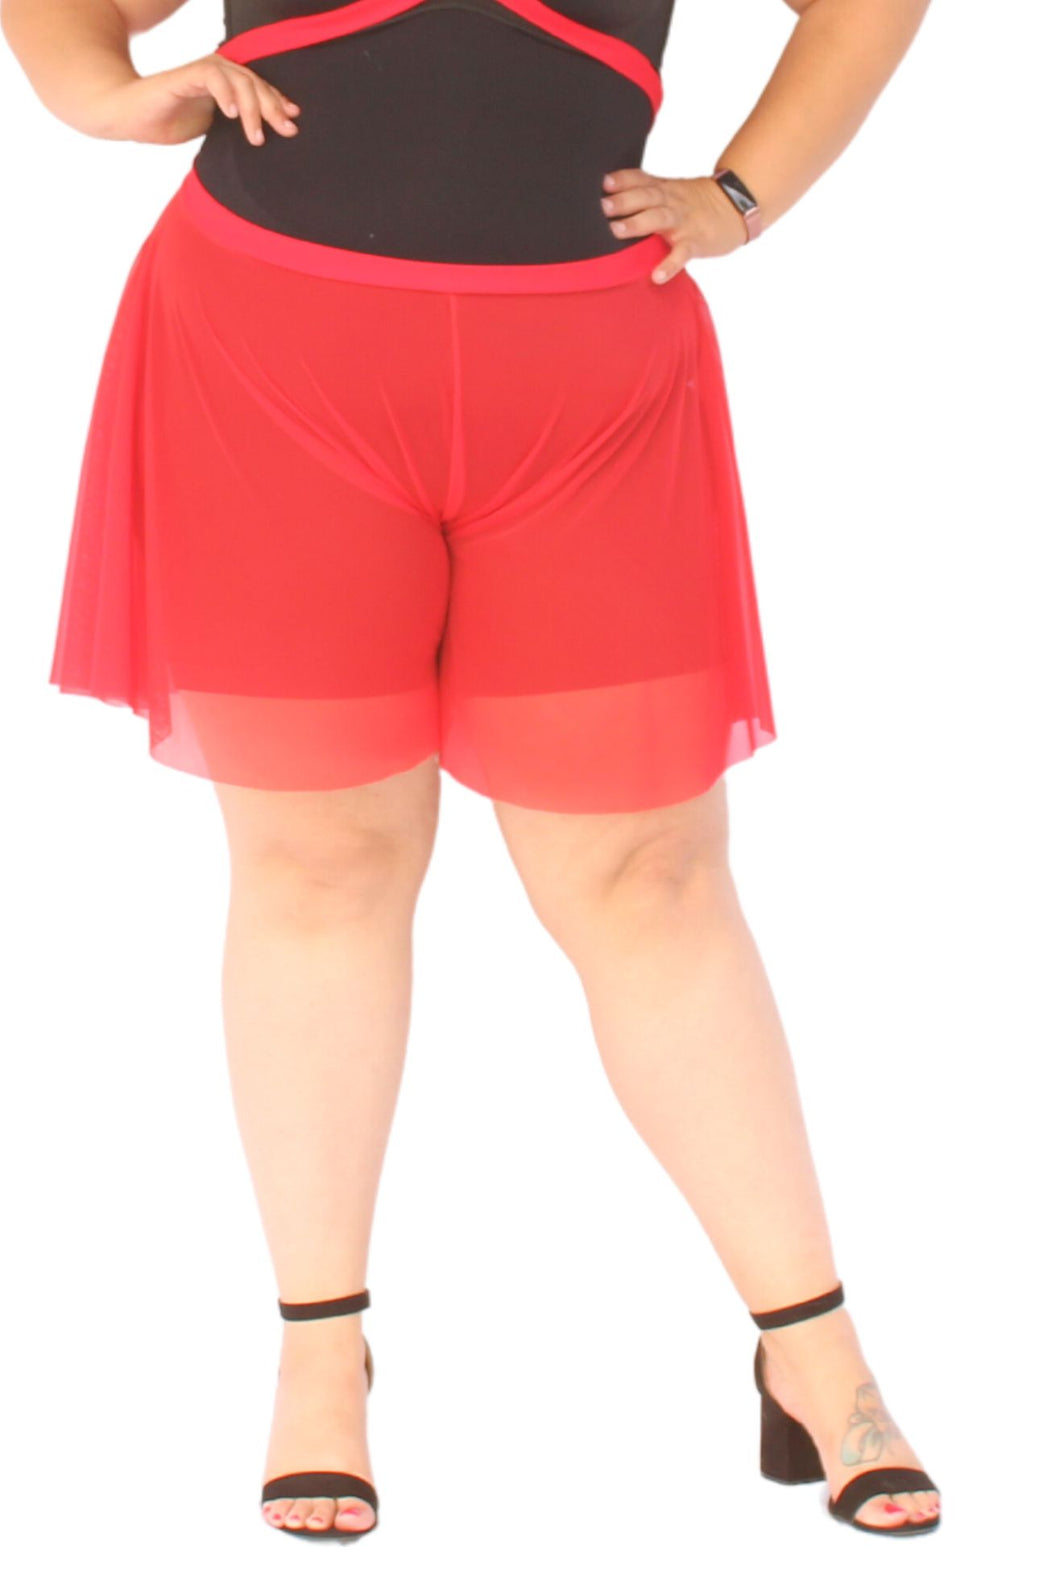 Chub Rub Sheer Red Shorts, Size 2X